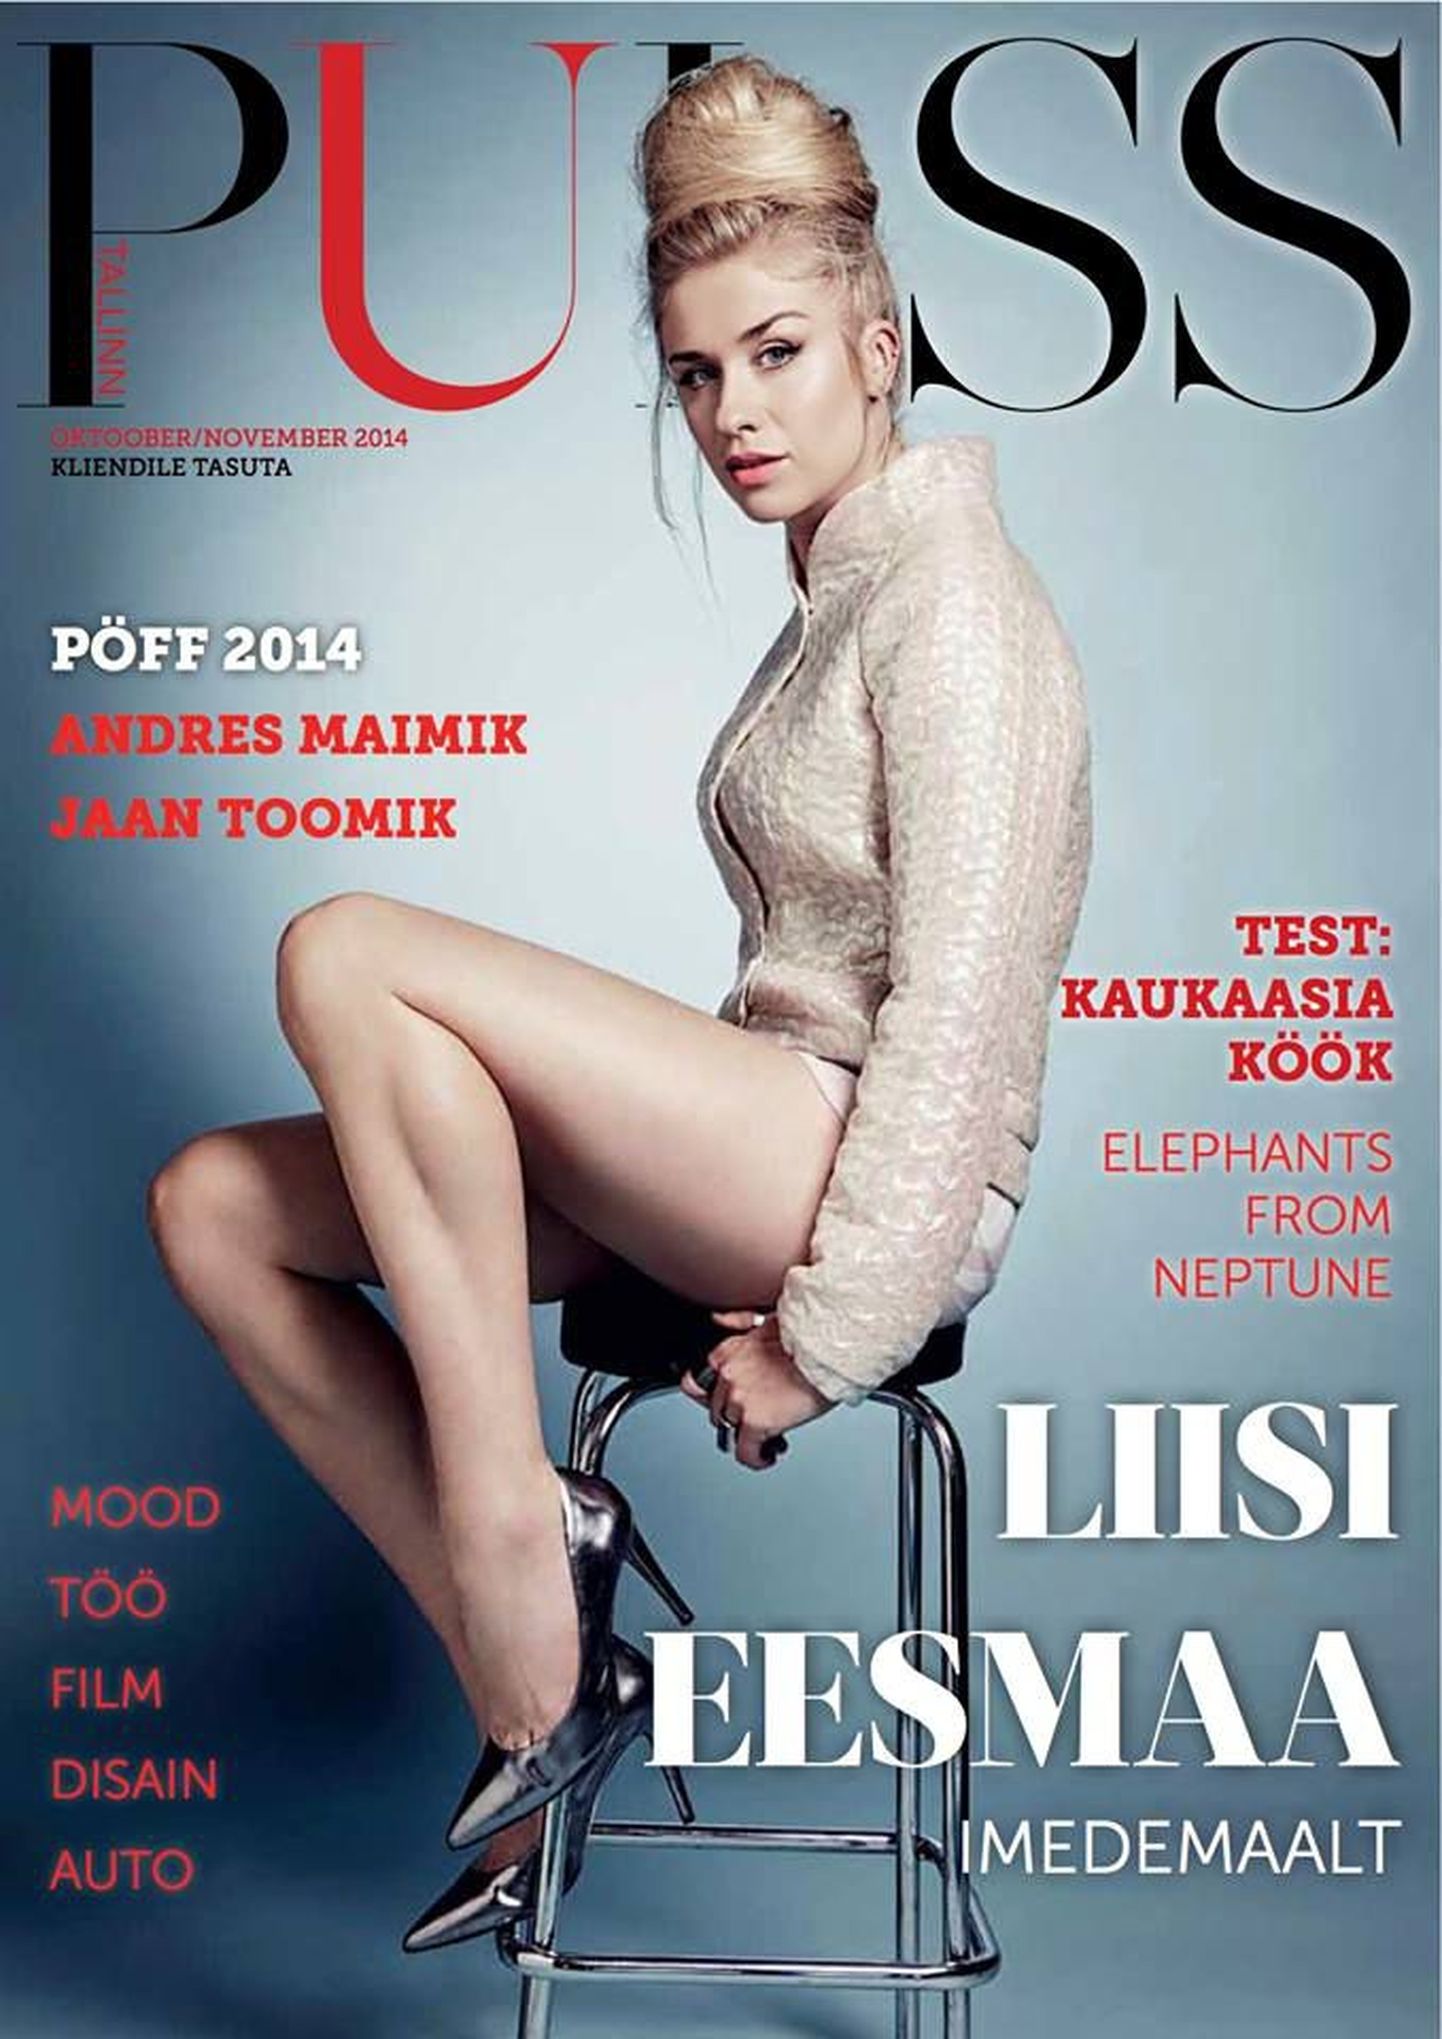 Журнал Pulss. Эстонская версия.